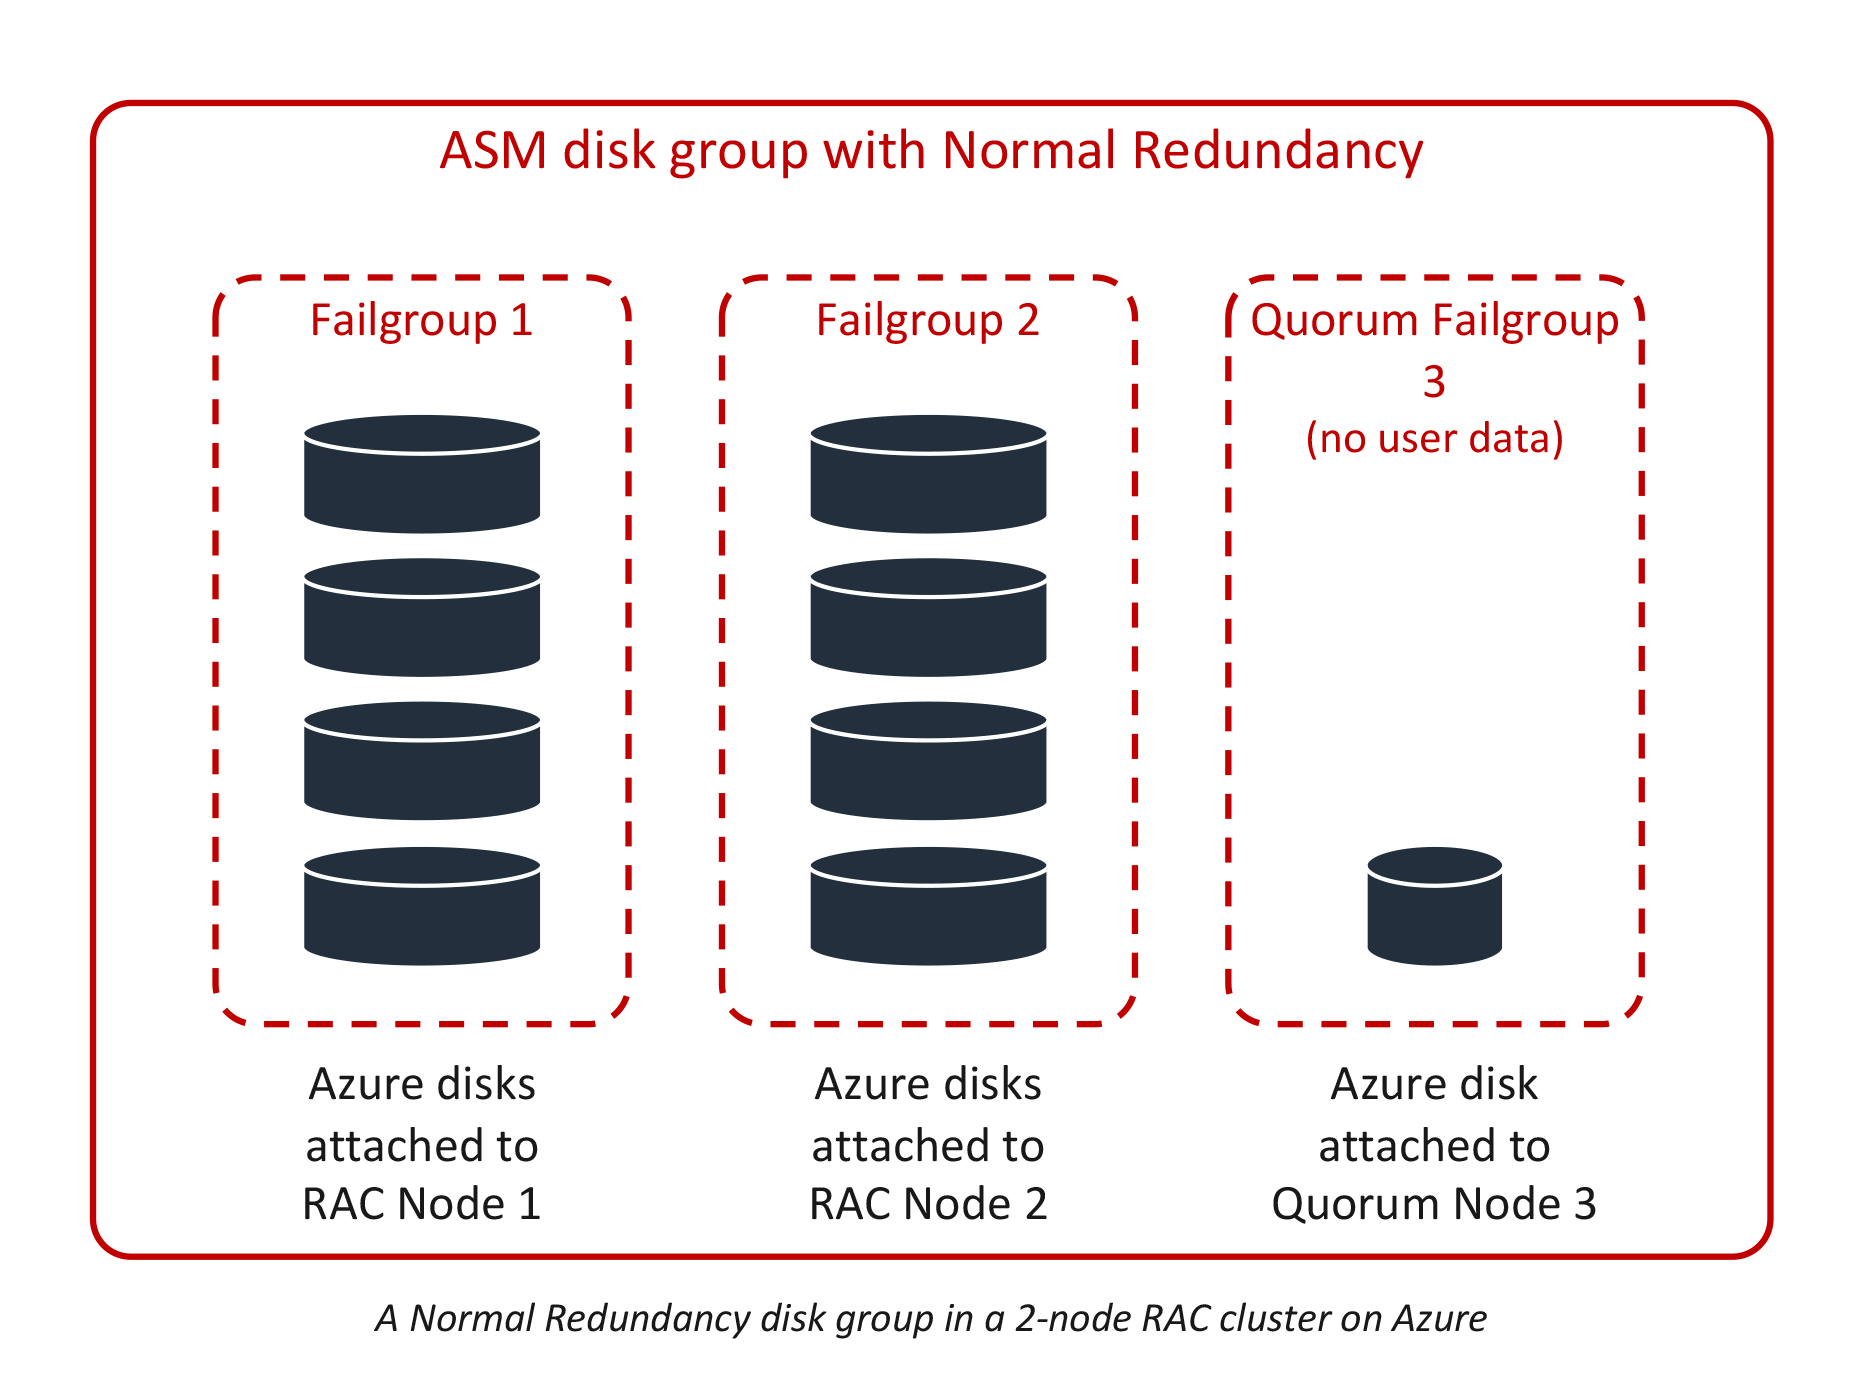 FlashGrid Cluster - Normal-Redundancy ASM Diskgroup on Azure